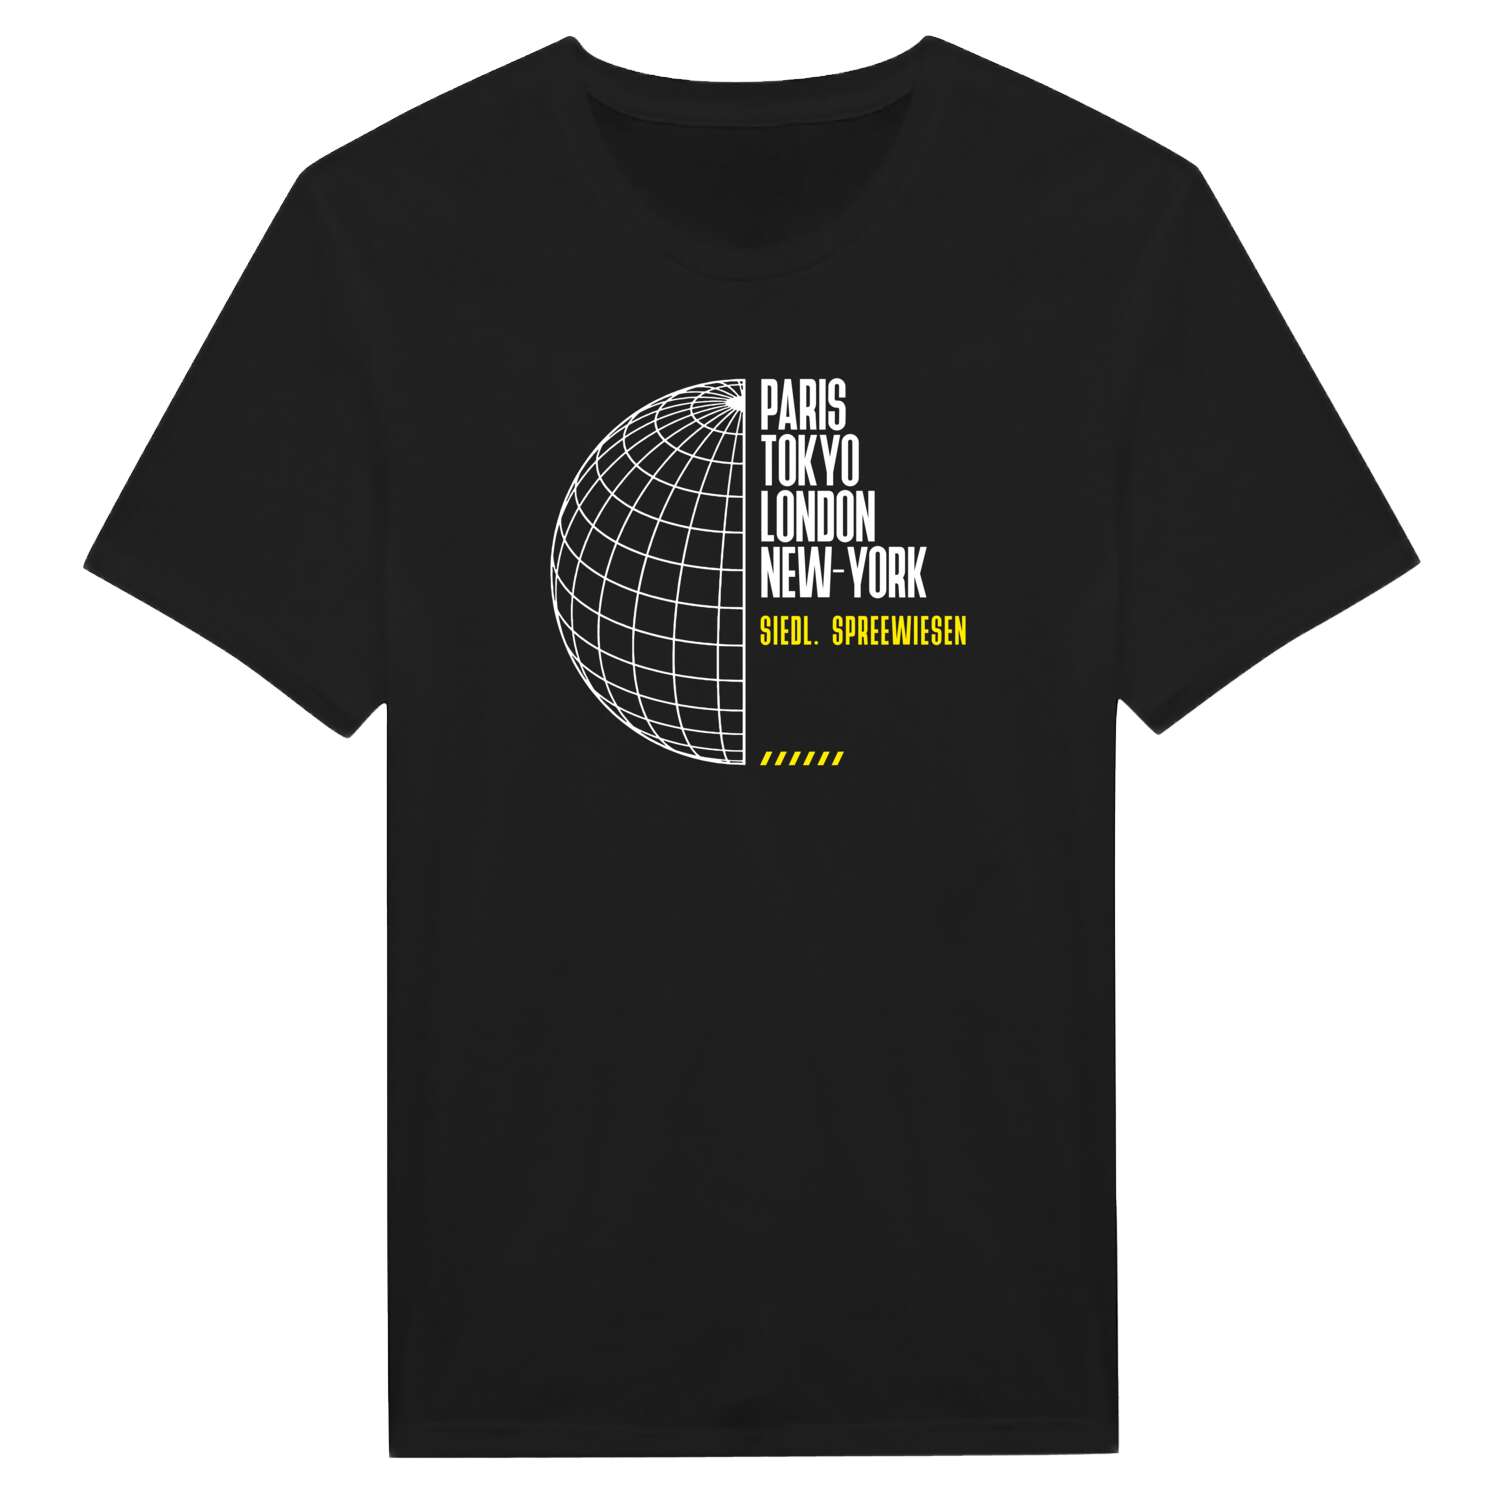 Siedl. Spreewiesen T-Shirt »Paris Tokyo London«